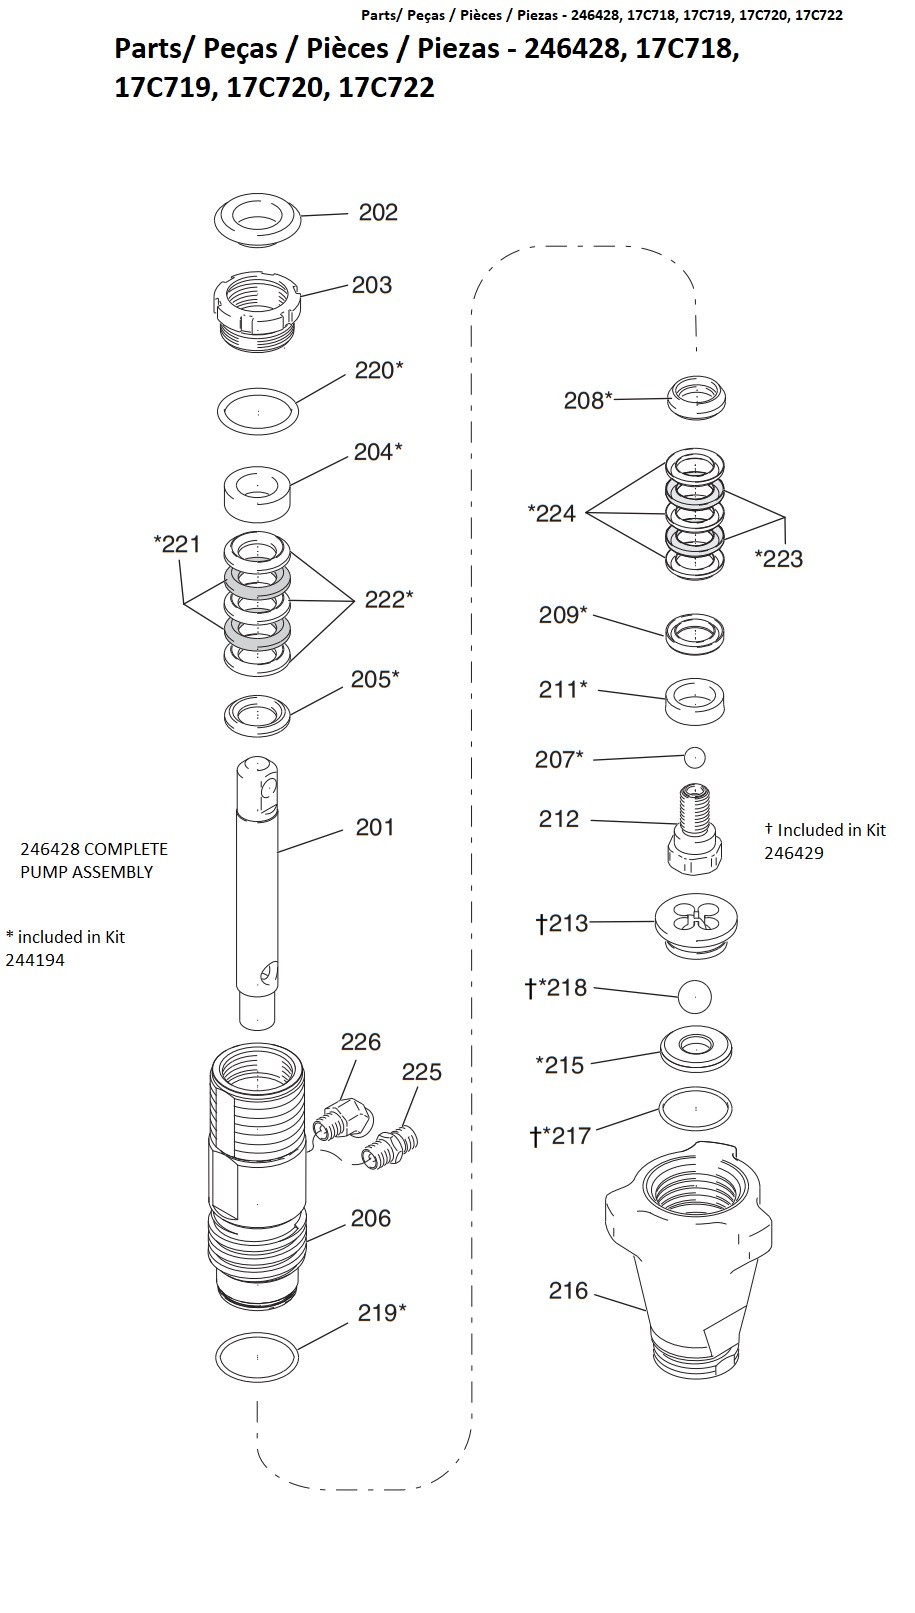 Graco 290 classic sprayer Hi-Boy Pump (246428) Parts List